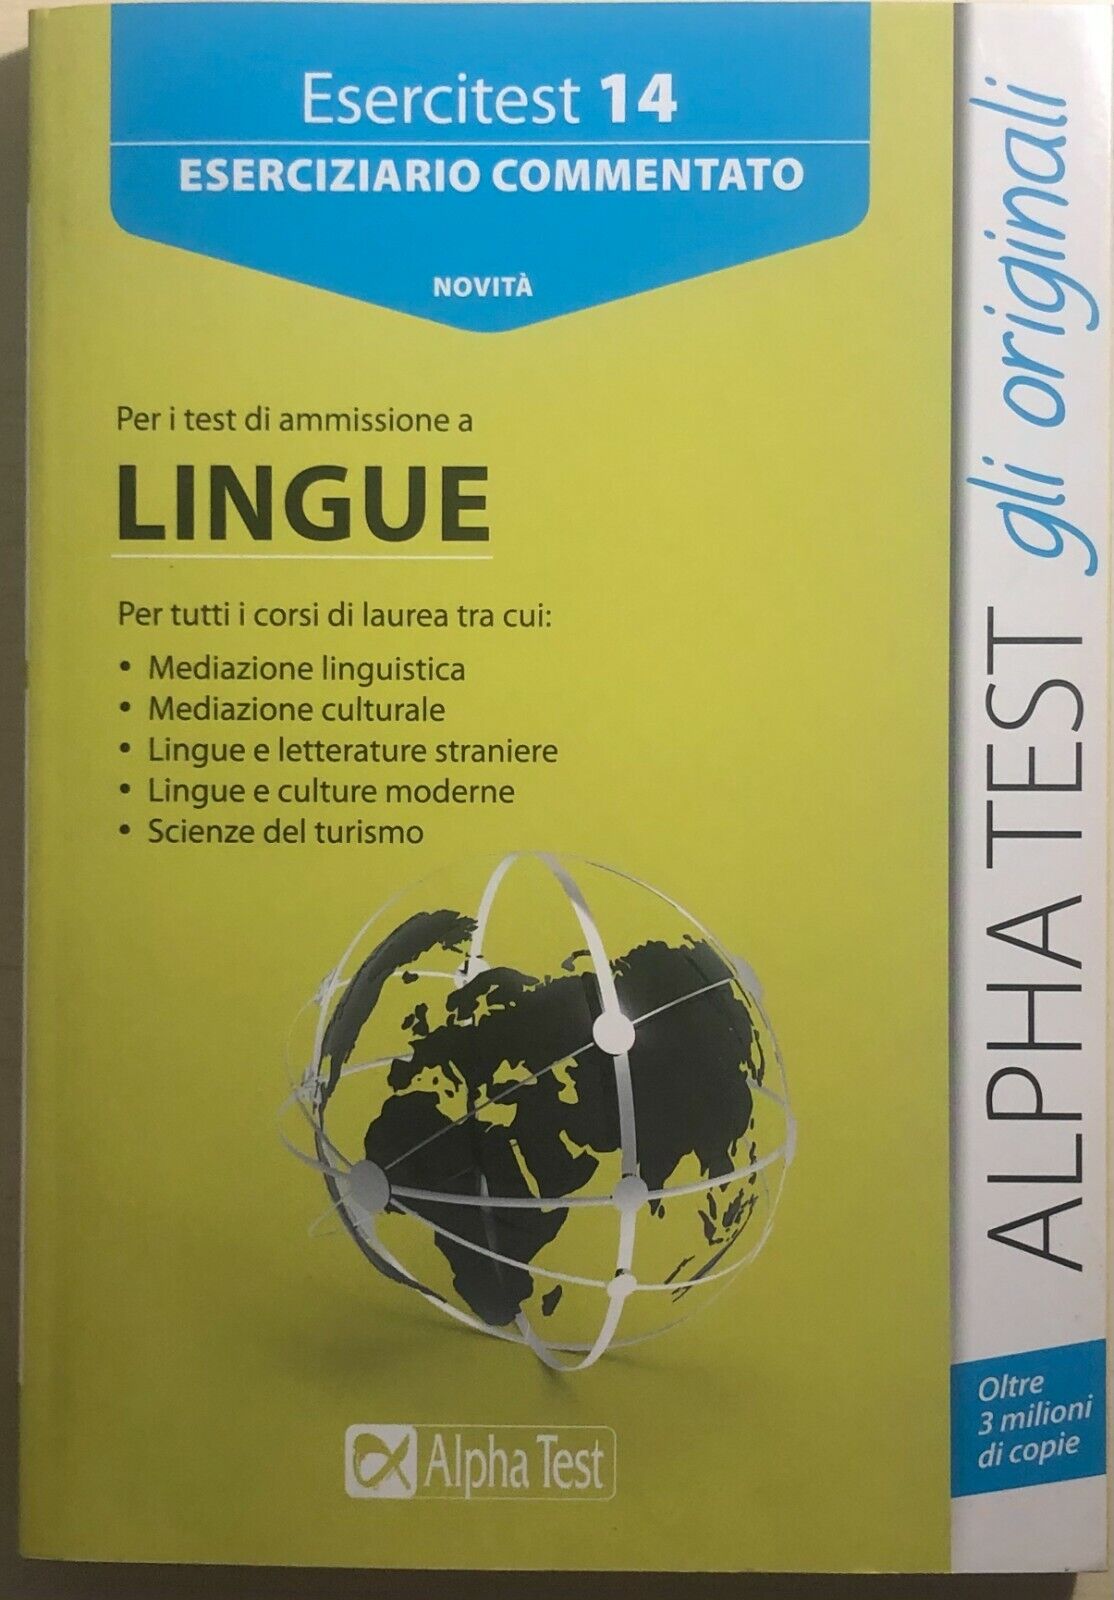 Esercitest 14 - Per i test di ammissione a Lingue di Alessandro Lucchese, France